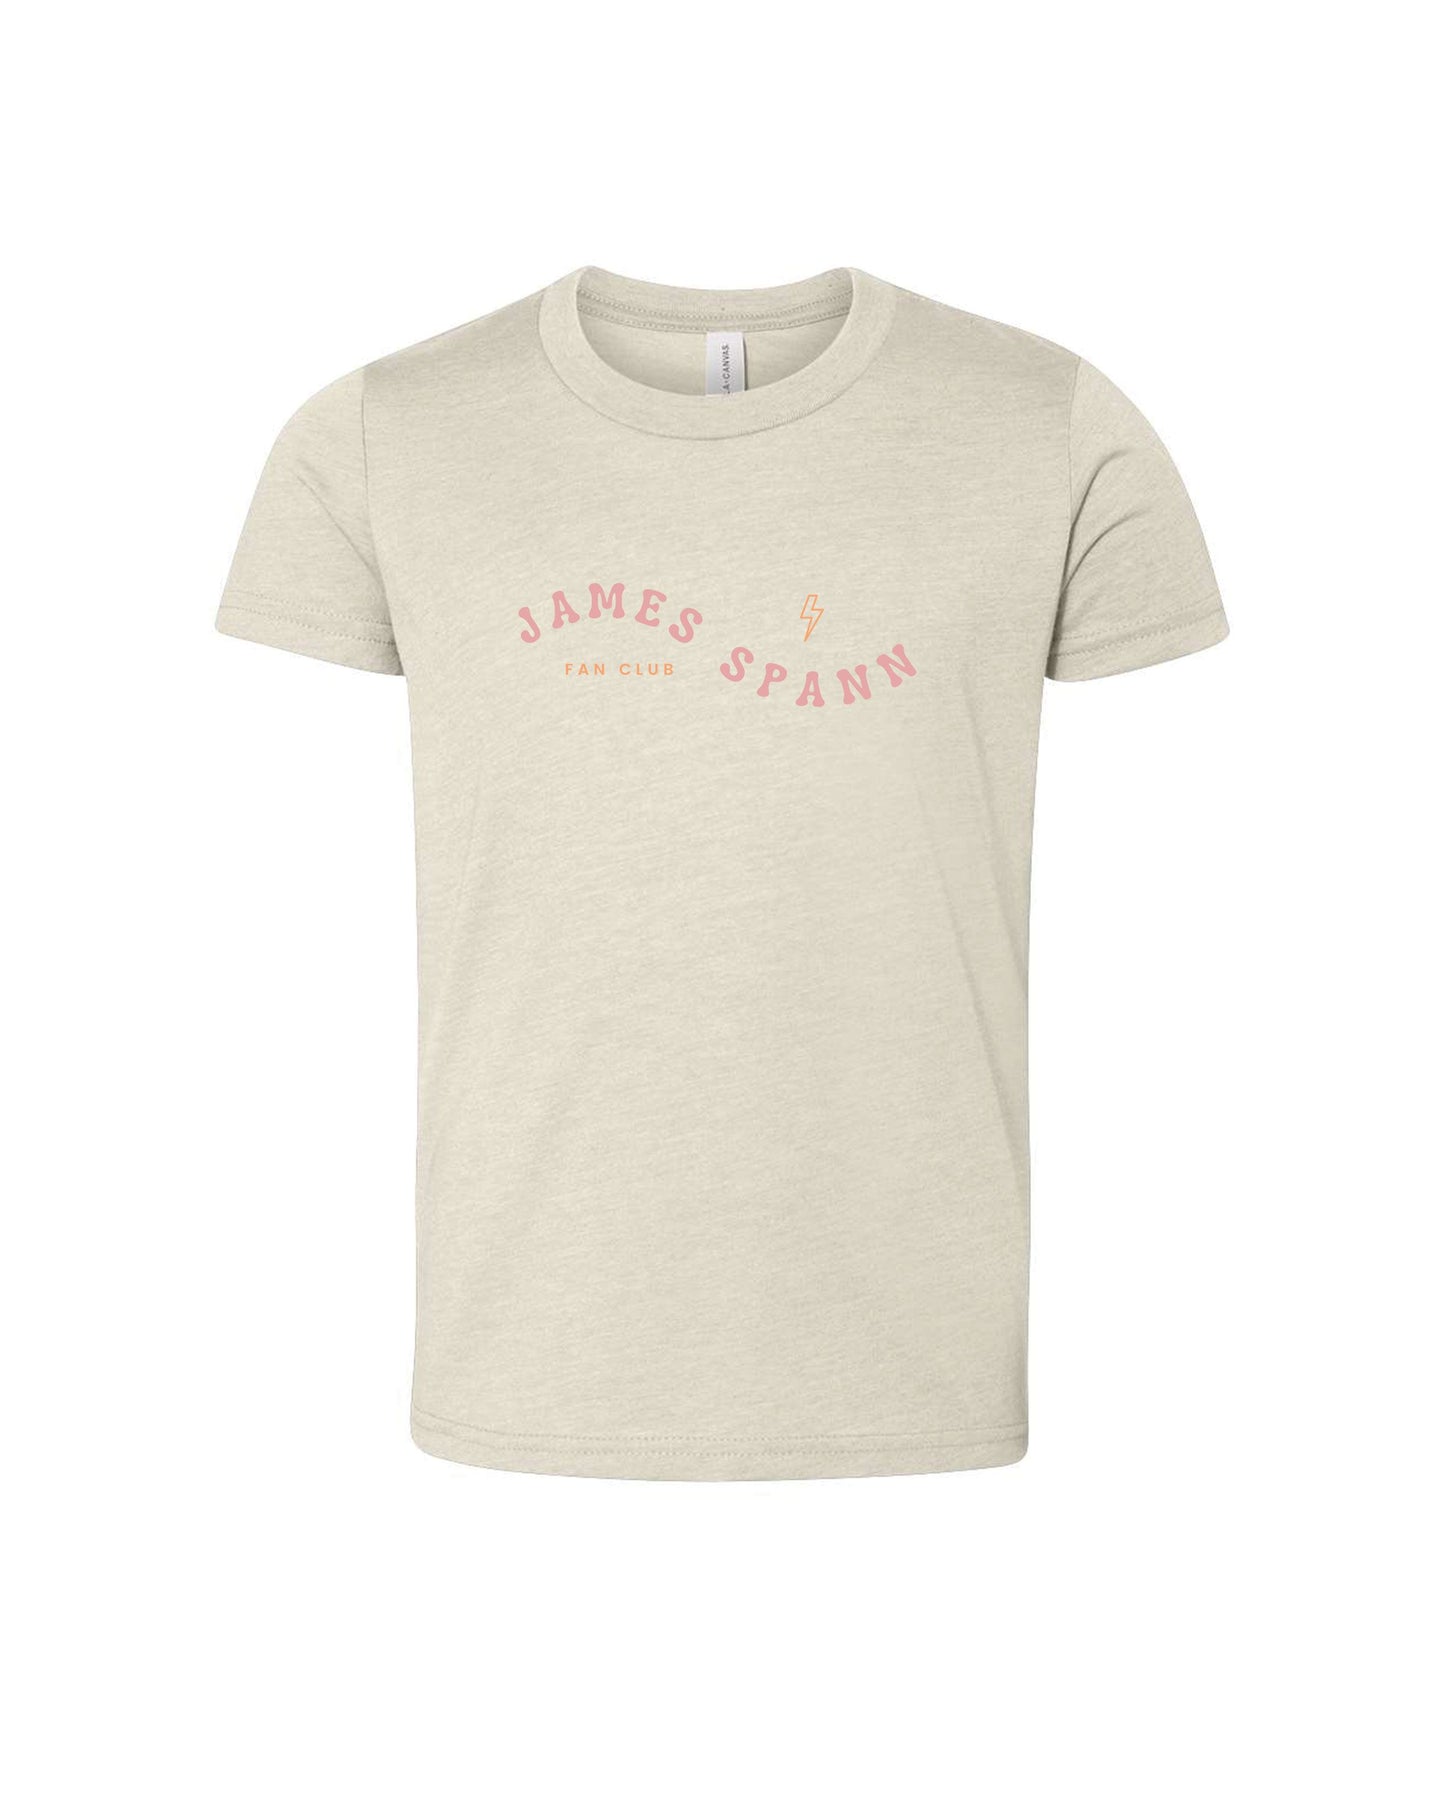 Curvy Spann Club | Tees | Kids-Kids Tees-Sister Shirts-Sister Shirts, Cute & Custom Tees for Mama & Littles in Trussville, Alabama.